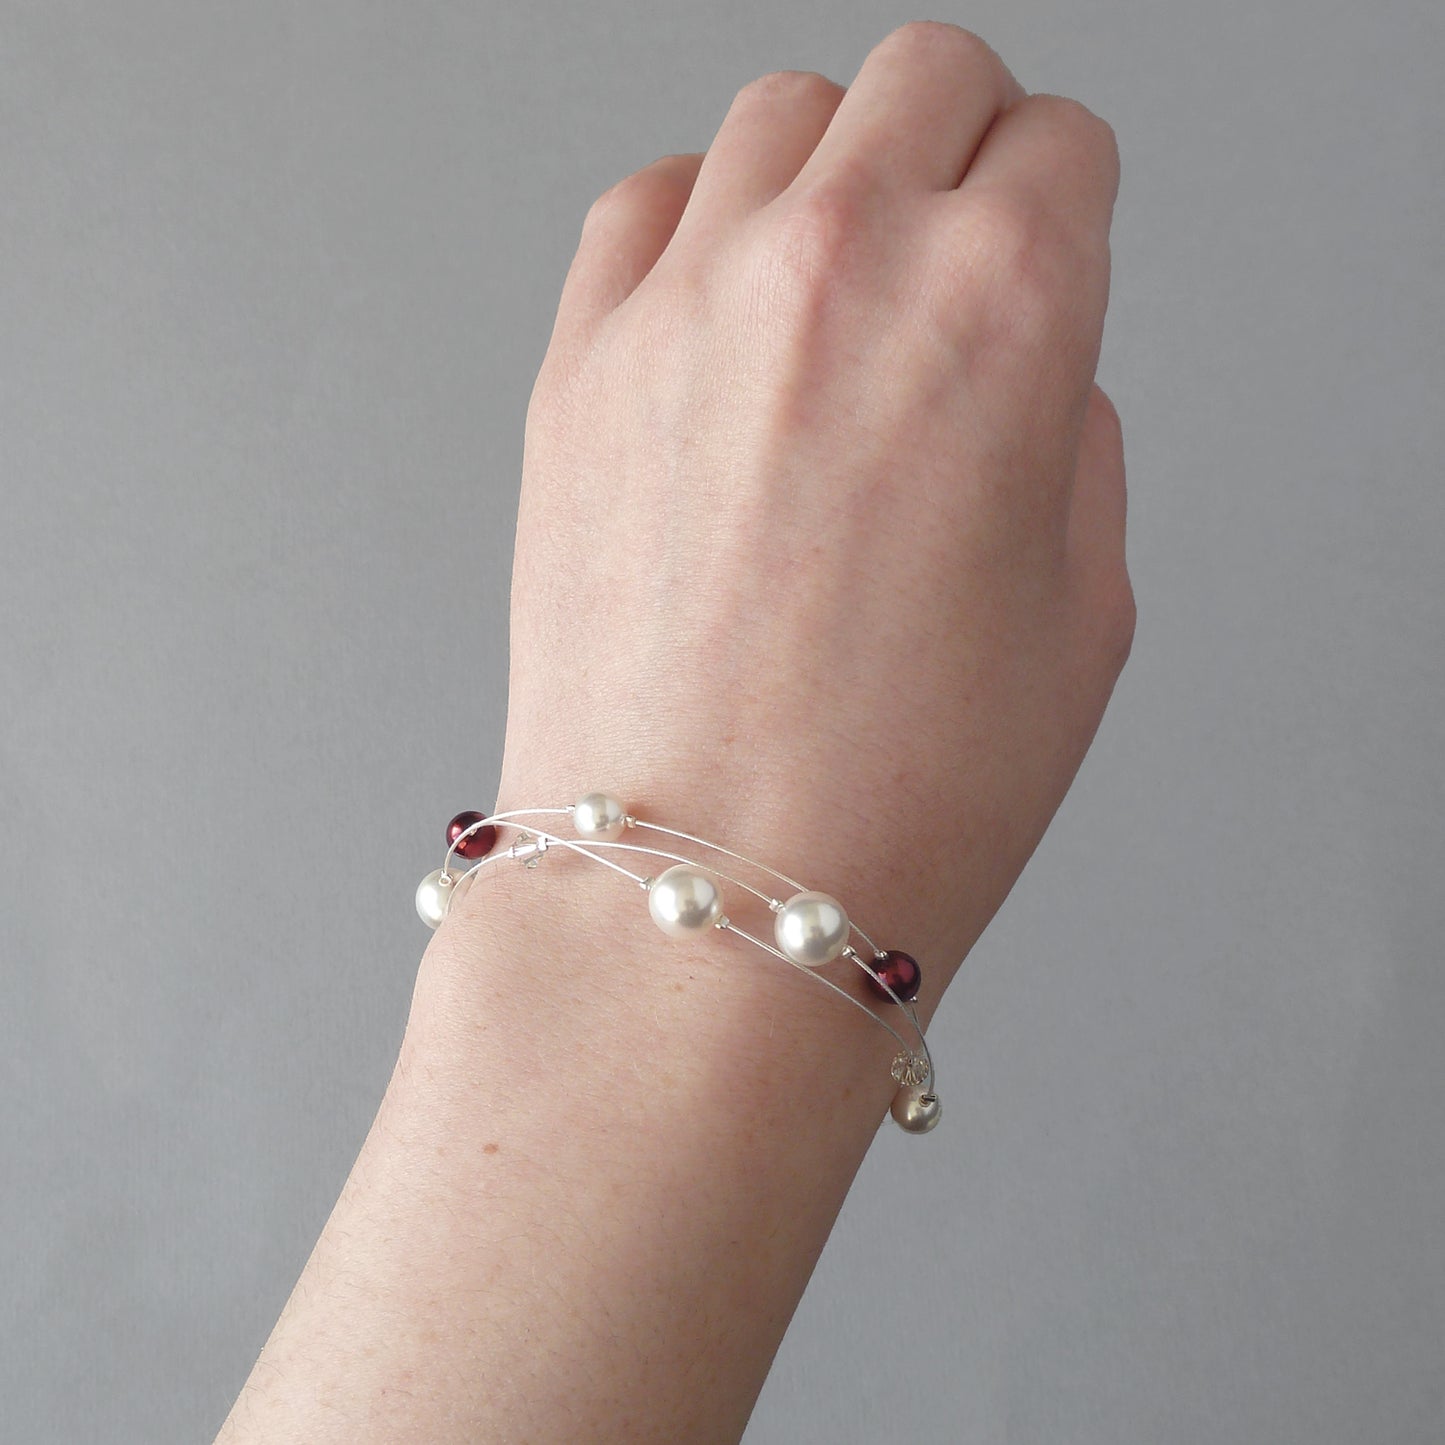 White and dark red pearl bracelet